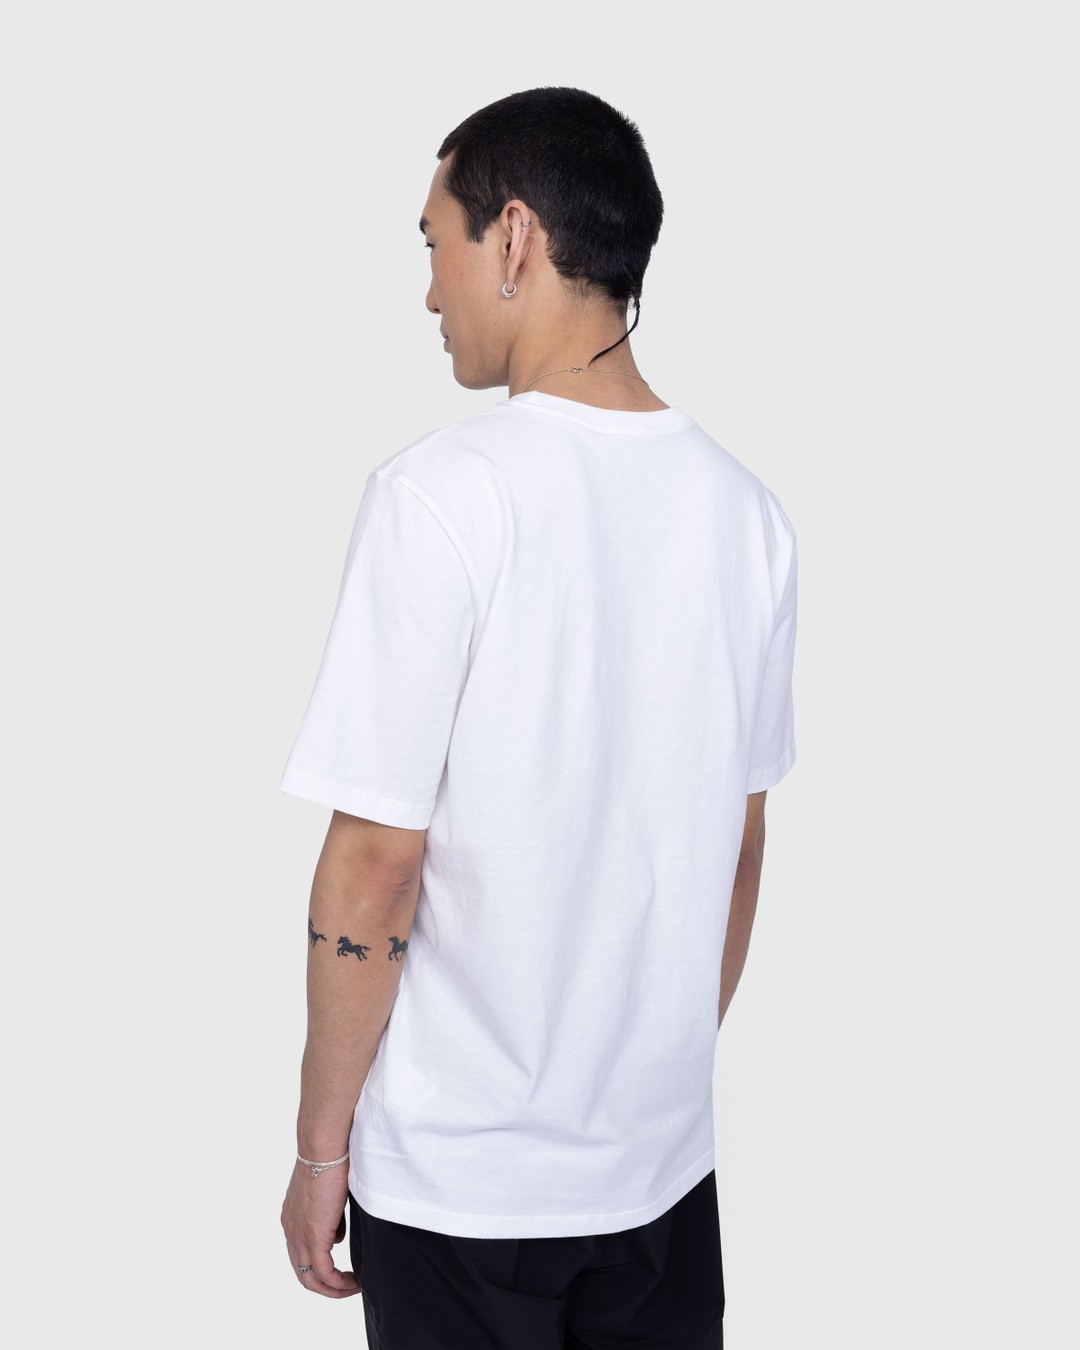 The North Face – Coordinates T-Shirt TNF White/TNF Black - T-shirts - White - Image 3